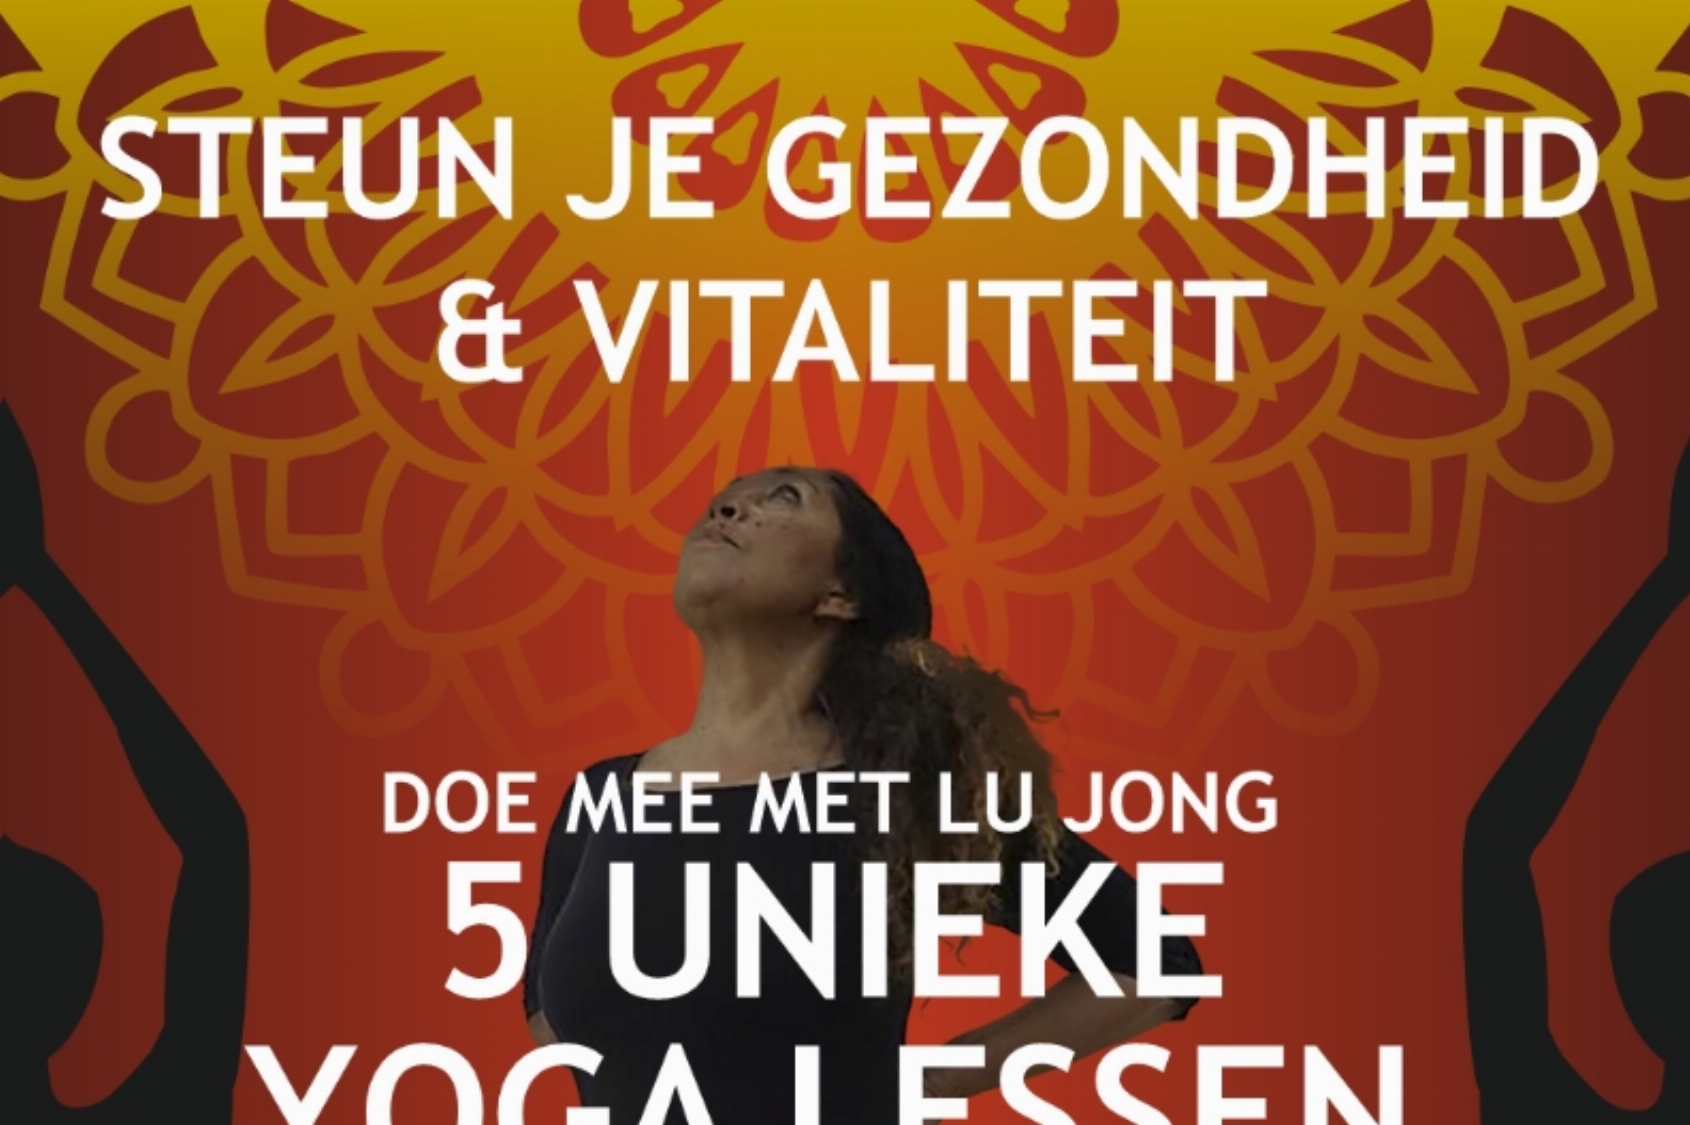 AANBIEDING: Lu Jong yoga (basis) lessen, eenvoudige bewegingsleer. Tot 30 april €49. Dagelijks les